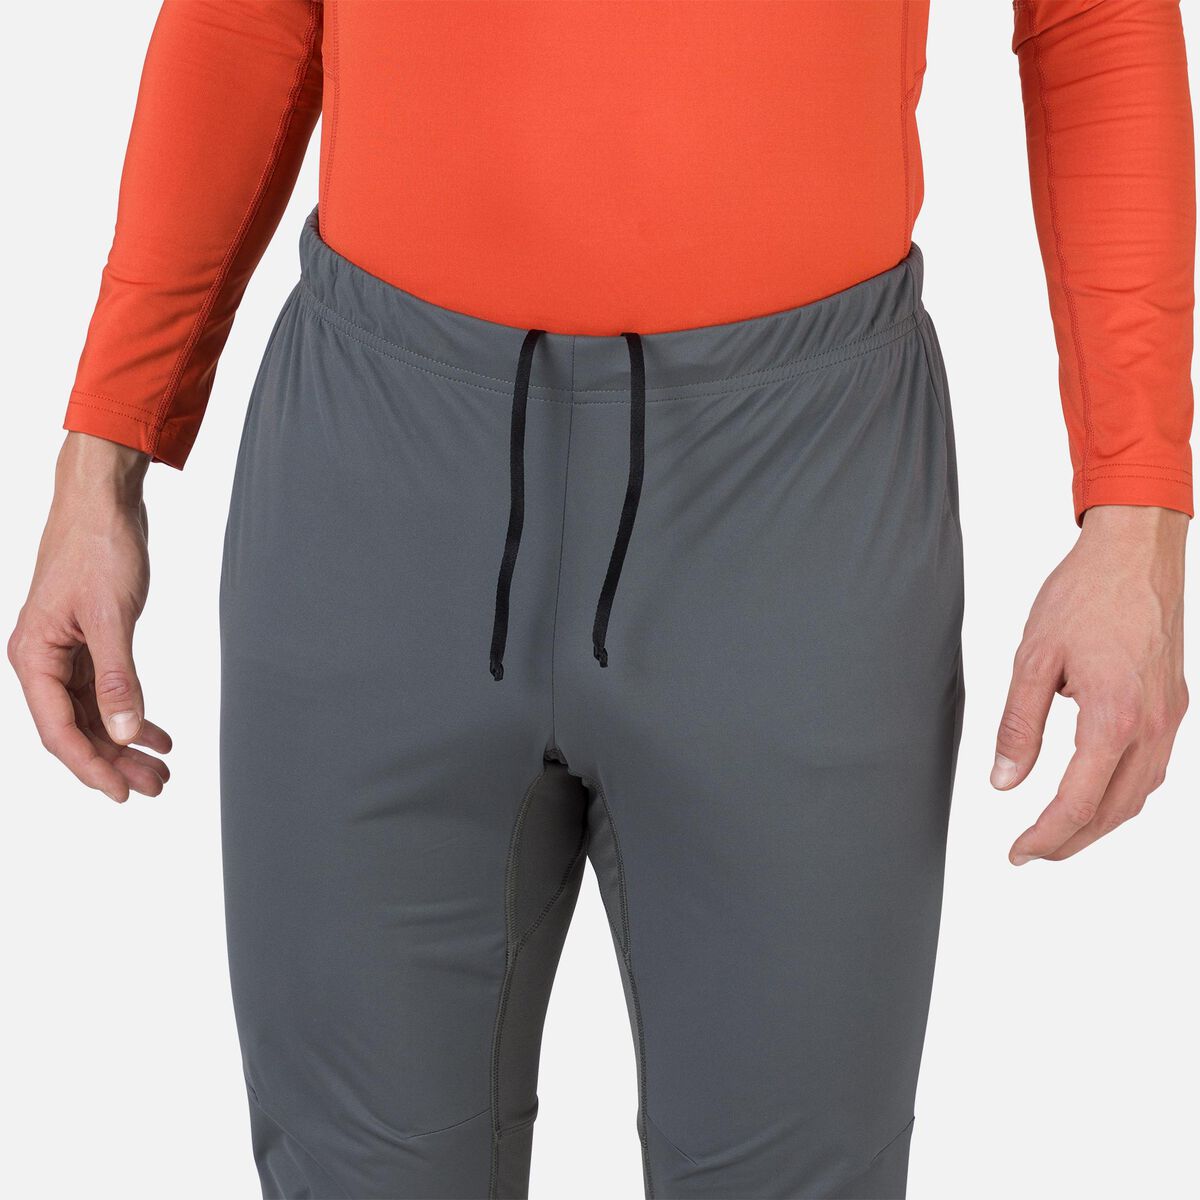 Men's Big Outdoor Pants - All In Motion™ Gray 3XL